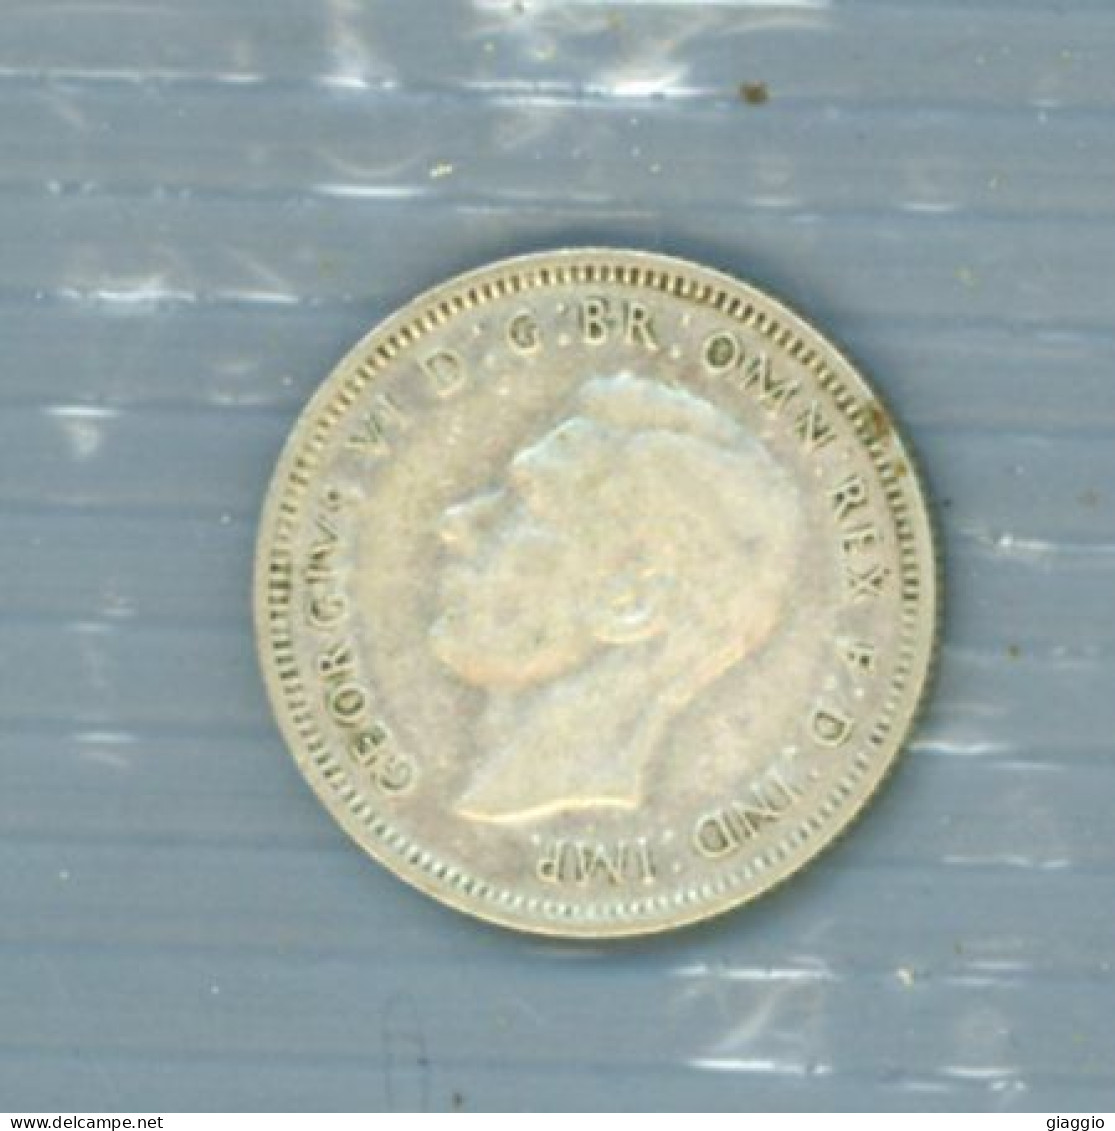 °°° Moneta N. 721 - Australia Shilling 1948 °°° - Non Classés